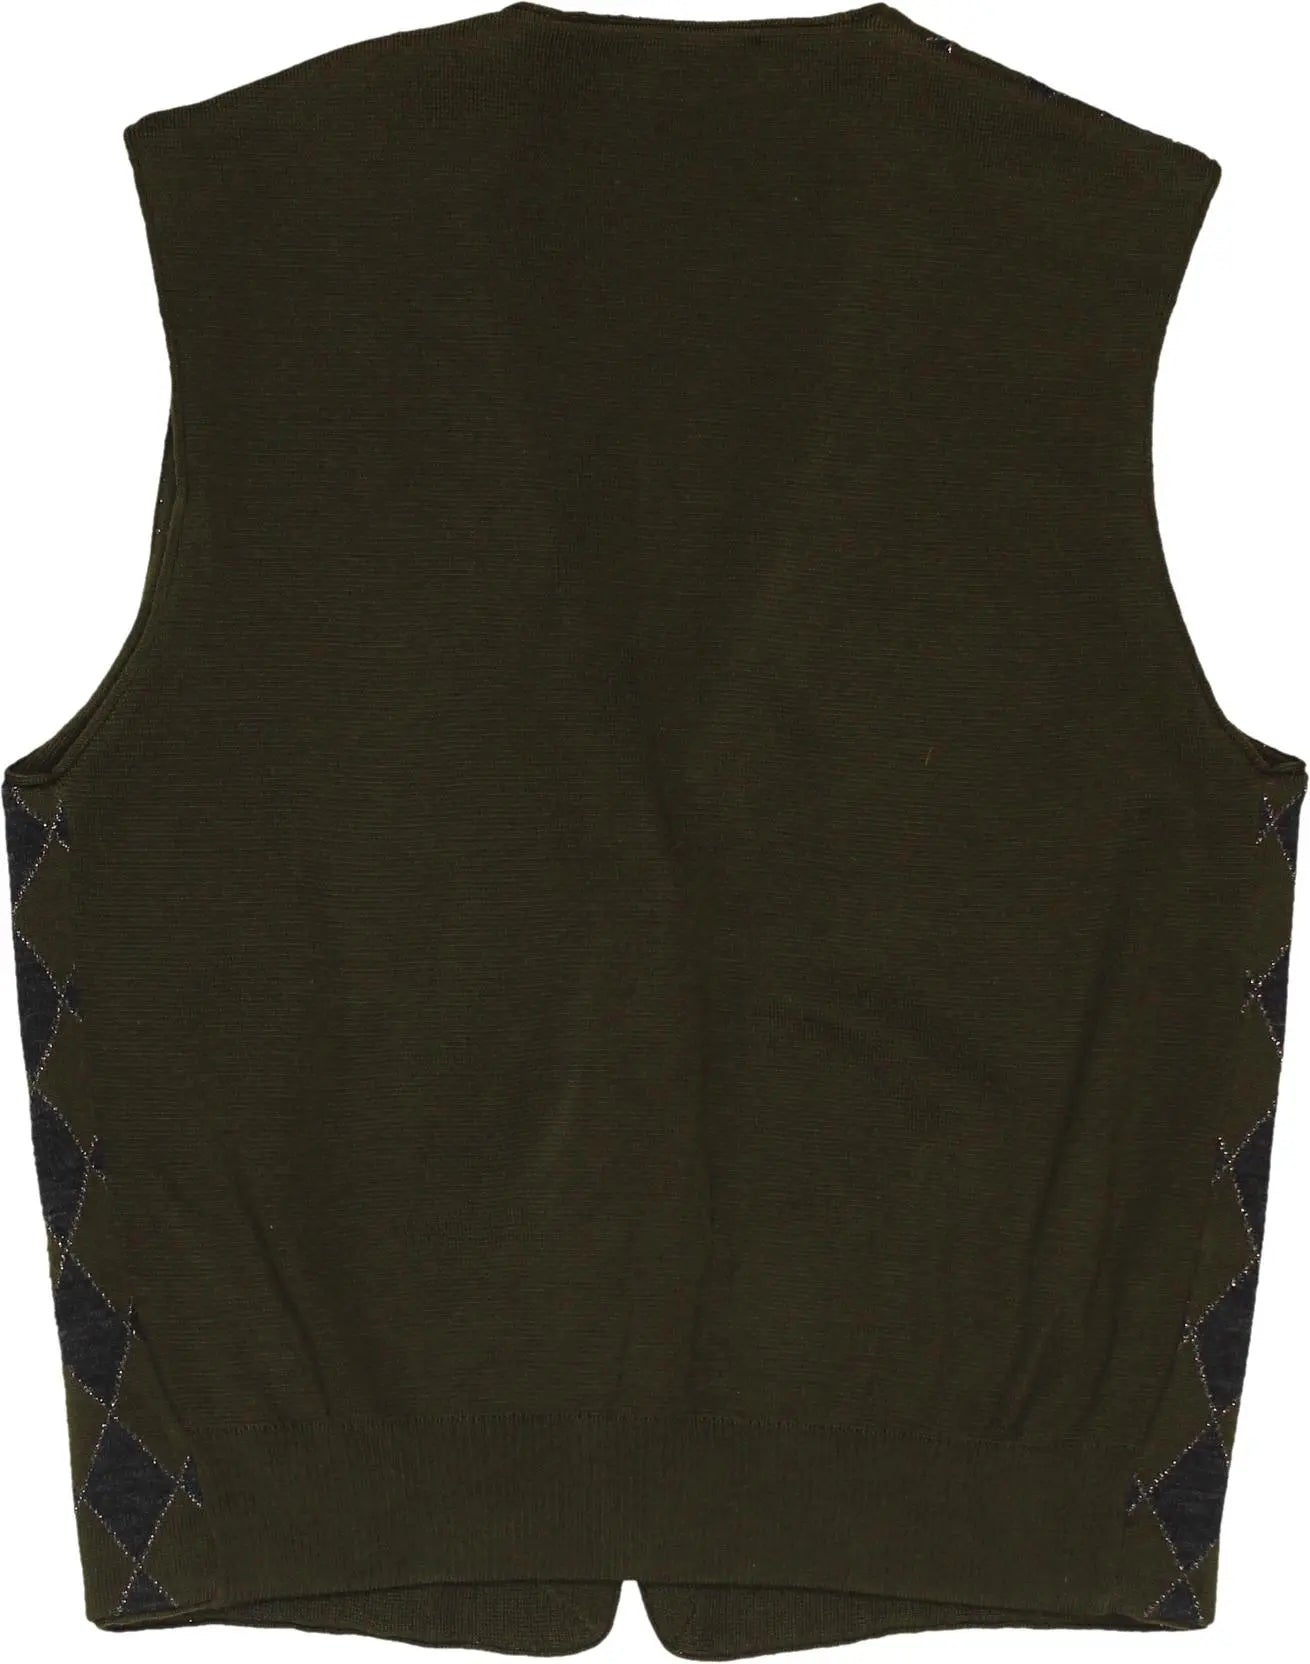 Marsutta - Vest- ThriftTale.com - Vintage and second handclothing